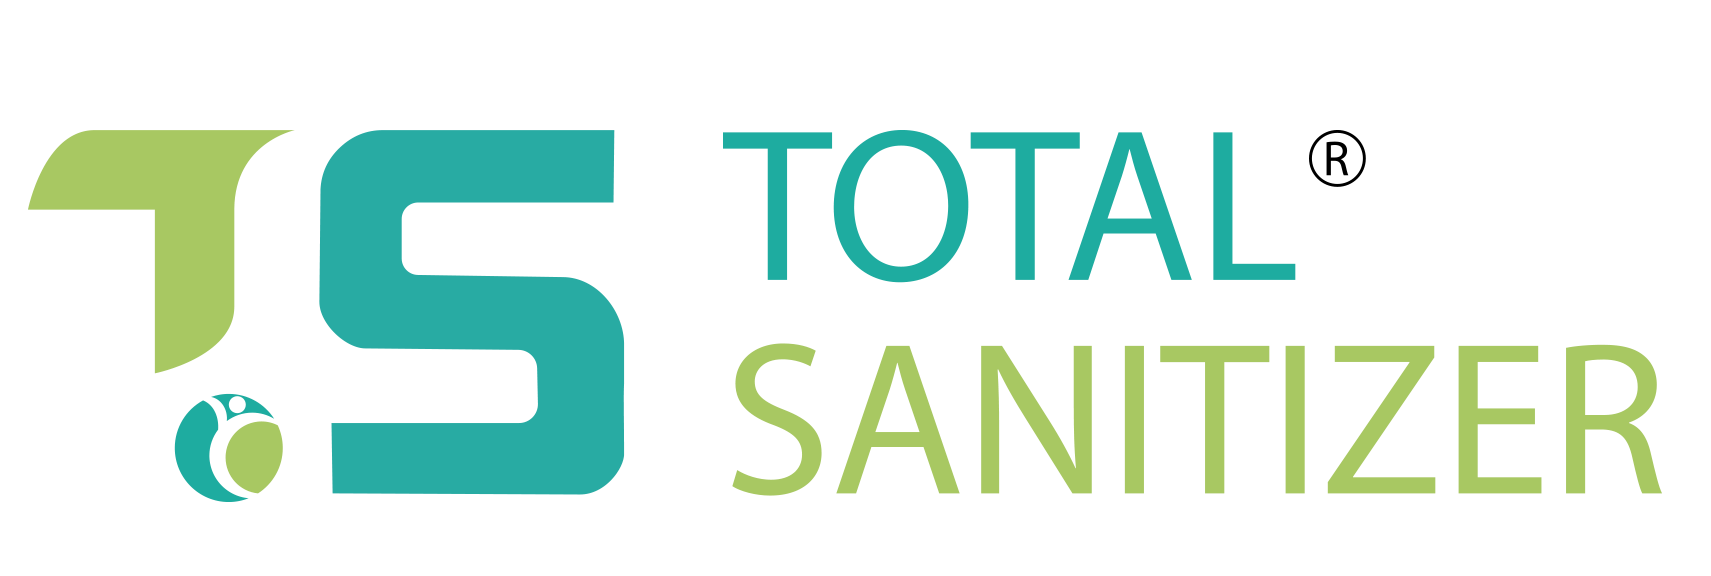 Total Sanitizer 2020 Logo SPONSOR